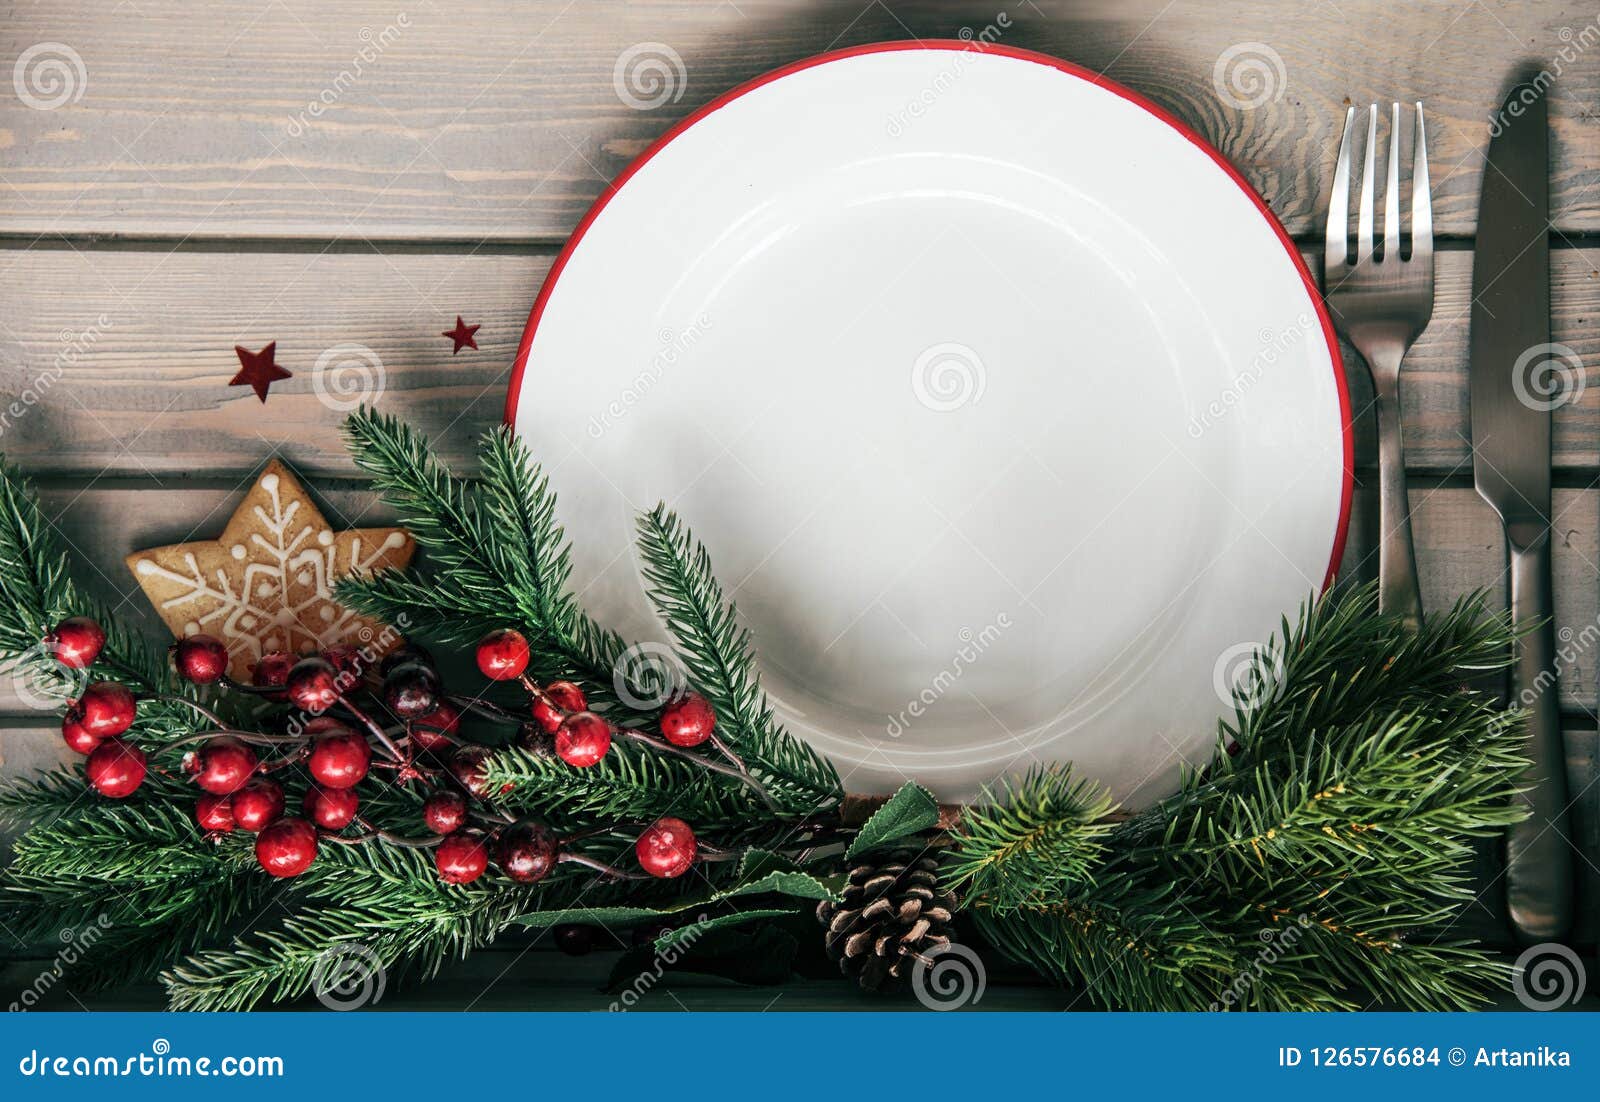 Christmas dinner plate stock photo. Image of empty, festive - 126576684